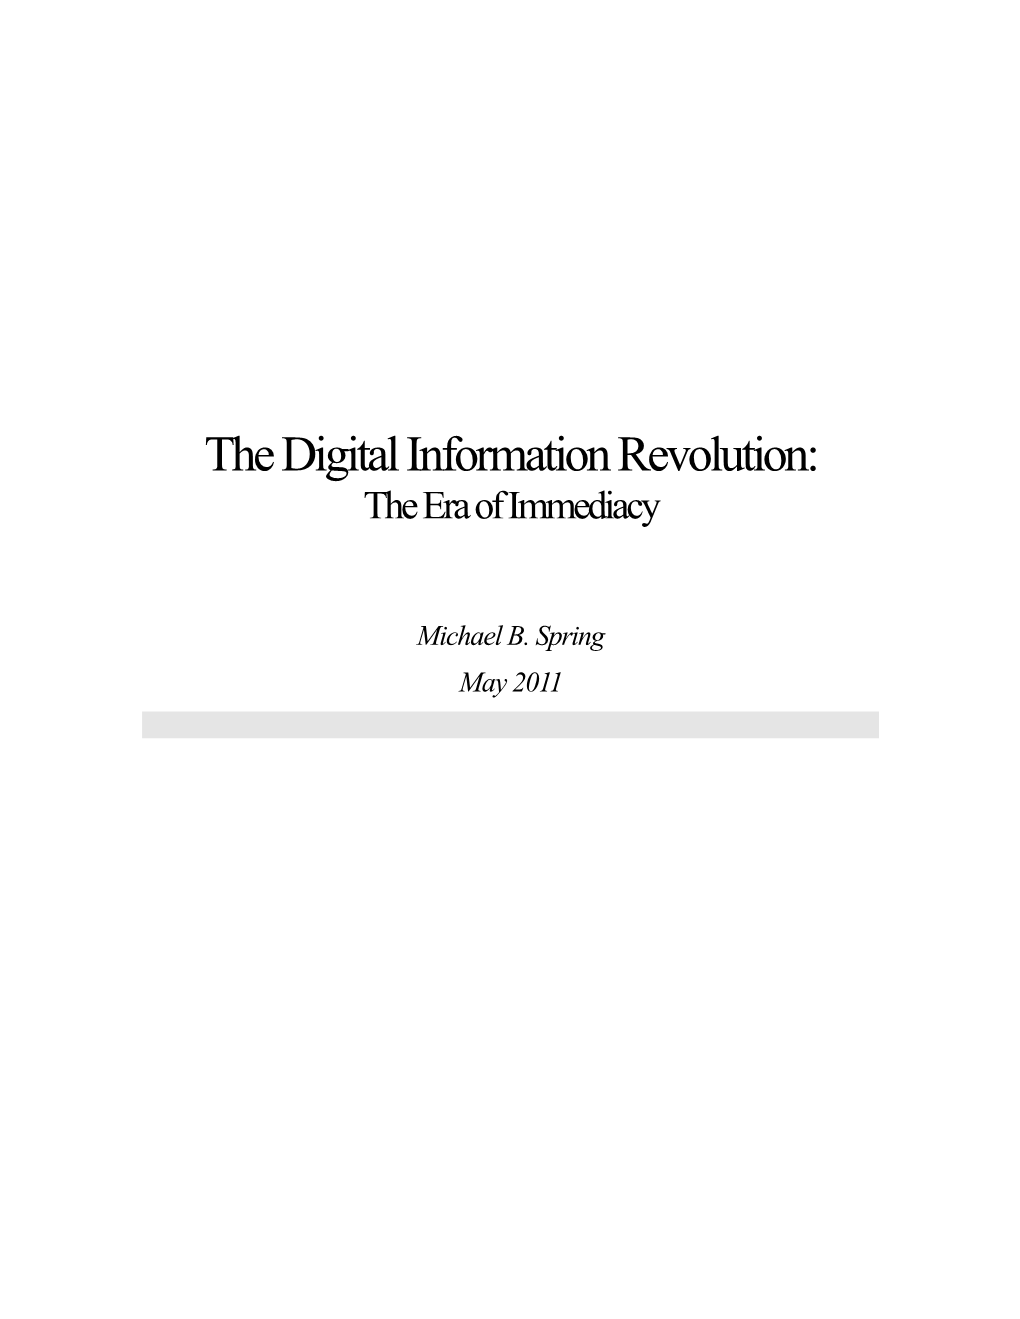 The Digital Information Revolution: the Era of Immediacy